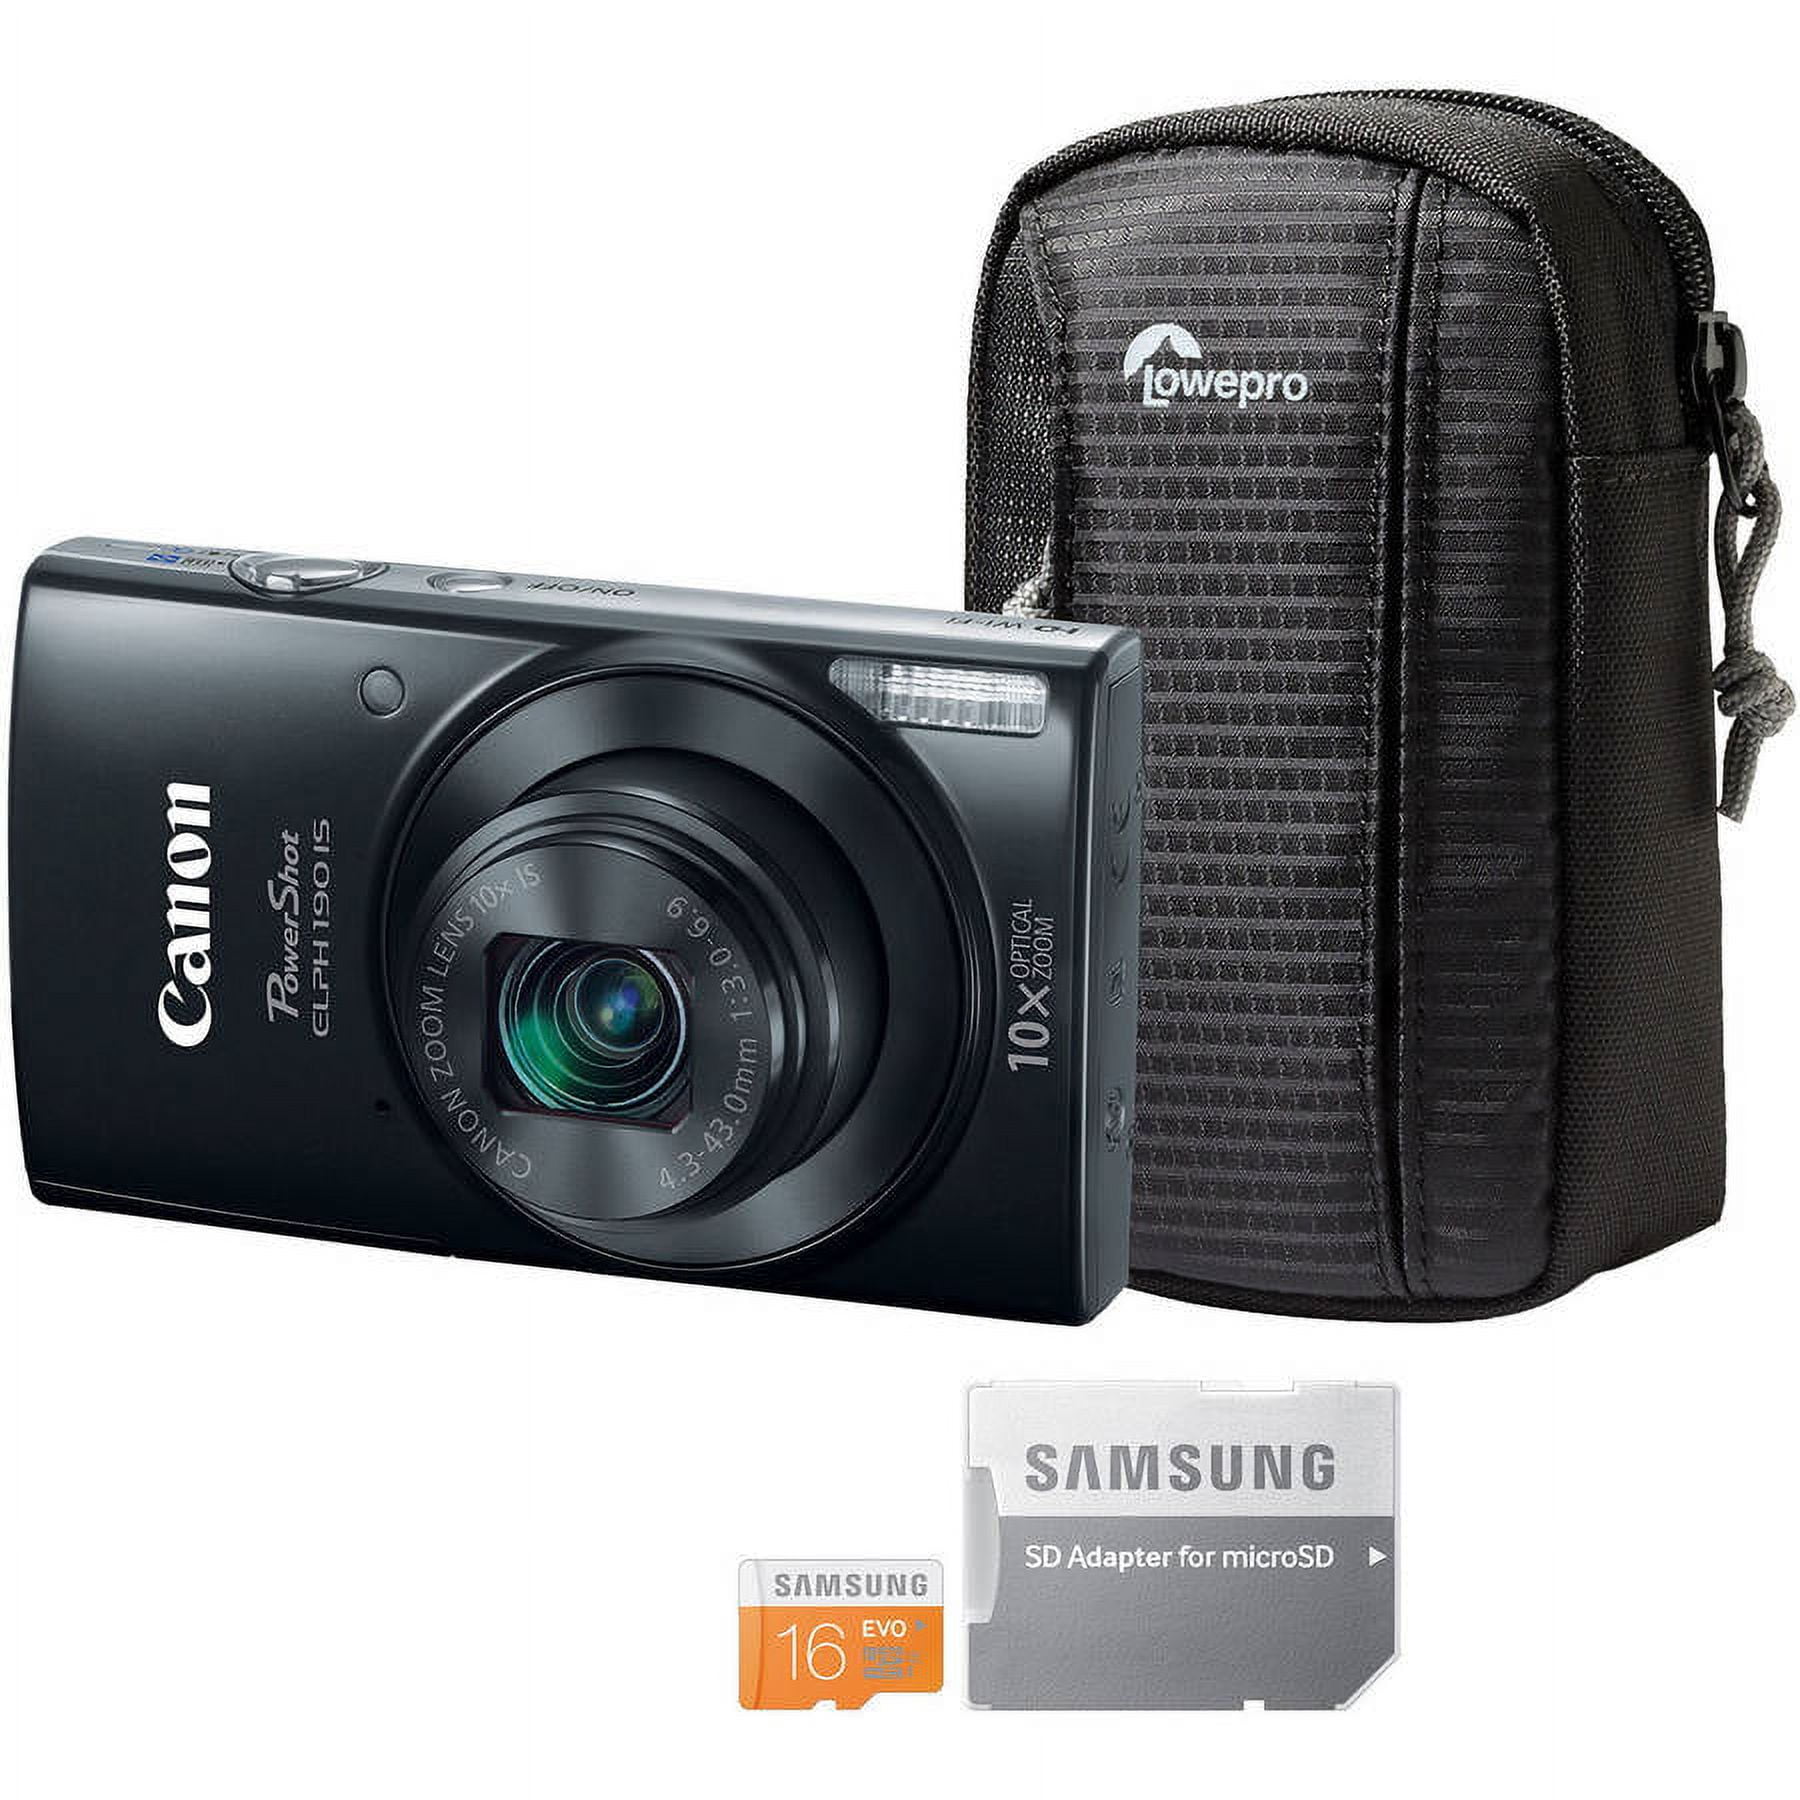  Canon PowerShot ELPH 190 IS cámara digital. : CANON